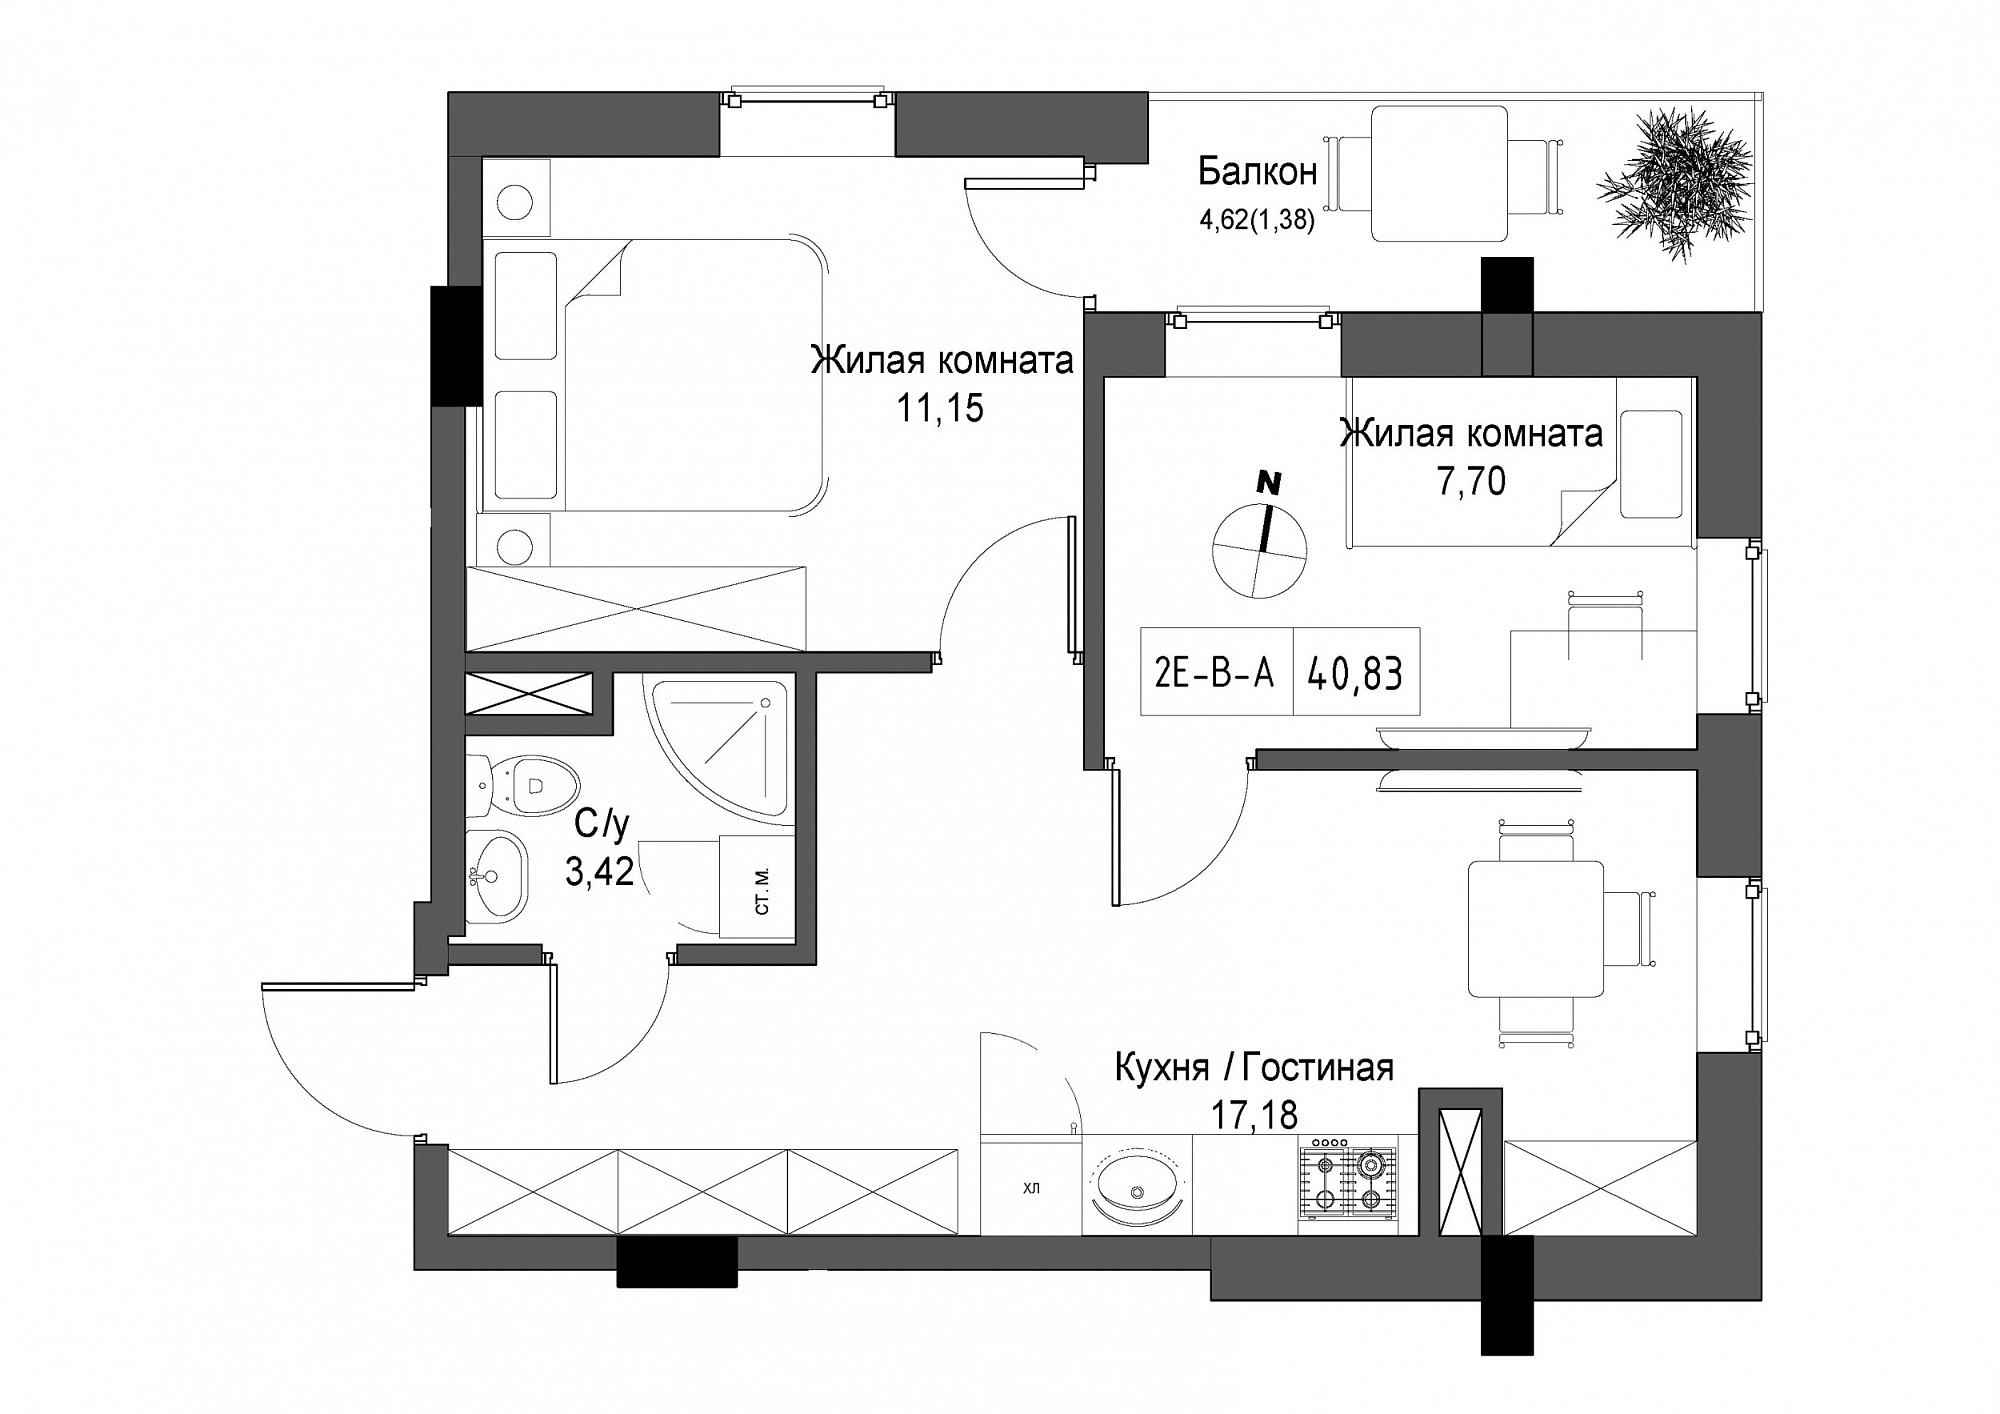 Планування 2-к квартира площею 40.83м2, UM-004-06/0005.